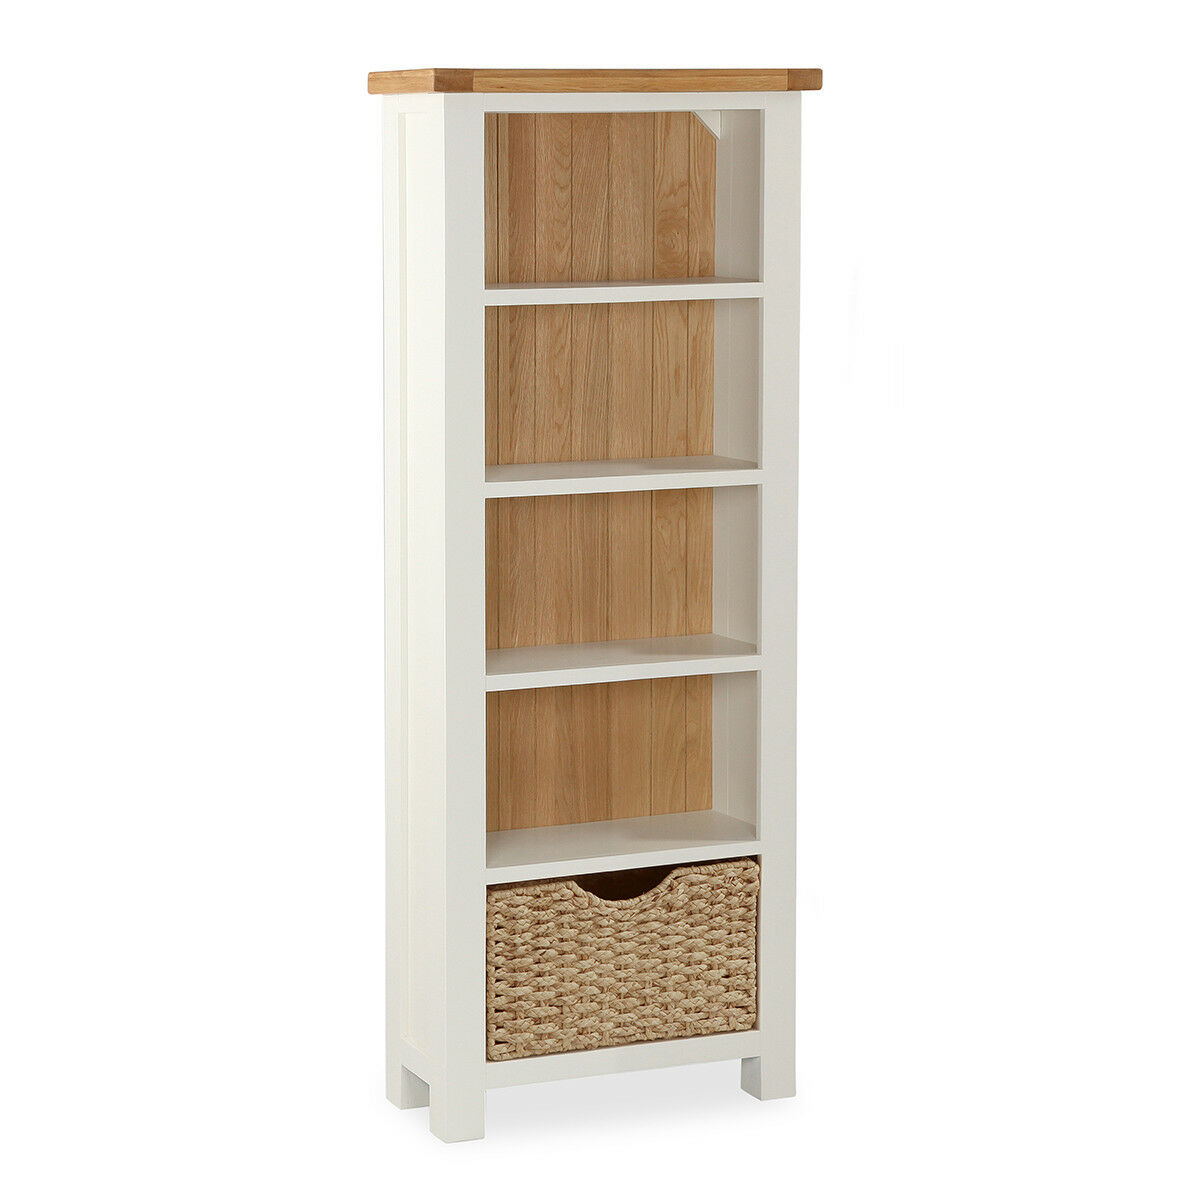 Details About Hampshire Cream Painted Oak Top Tall Slim Bookcase With Storage Basket regarding measurements 1200 X 1200